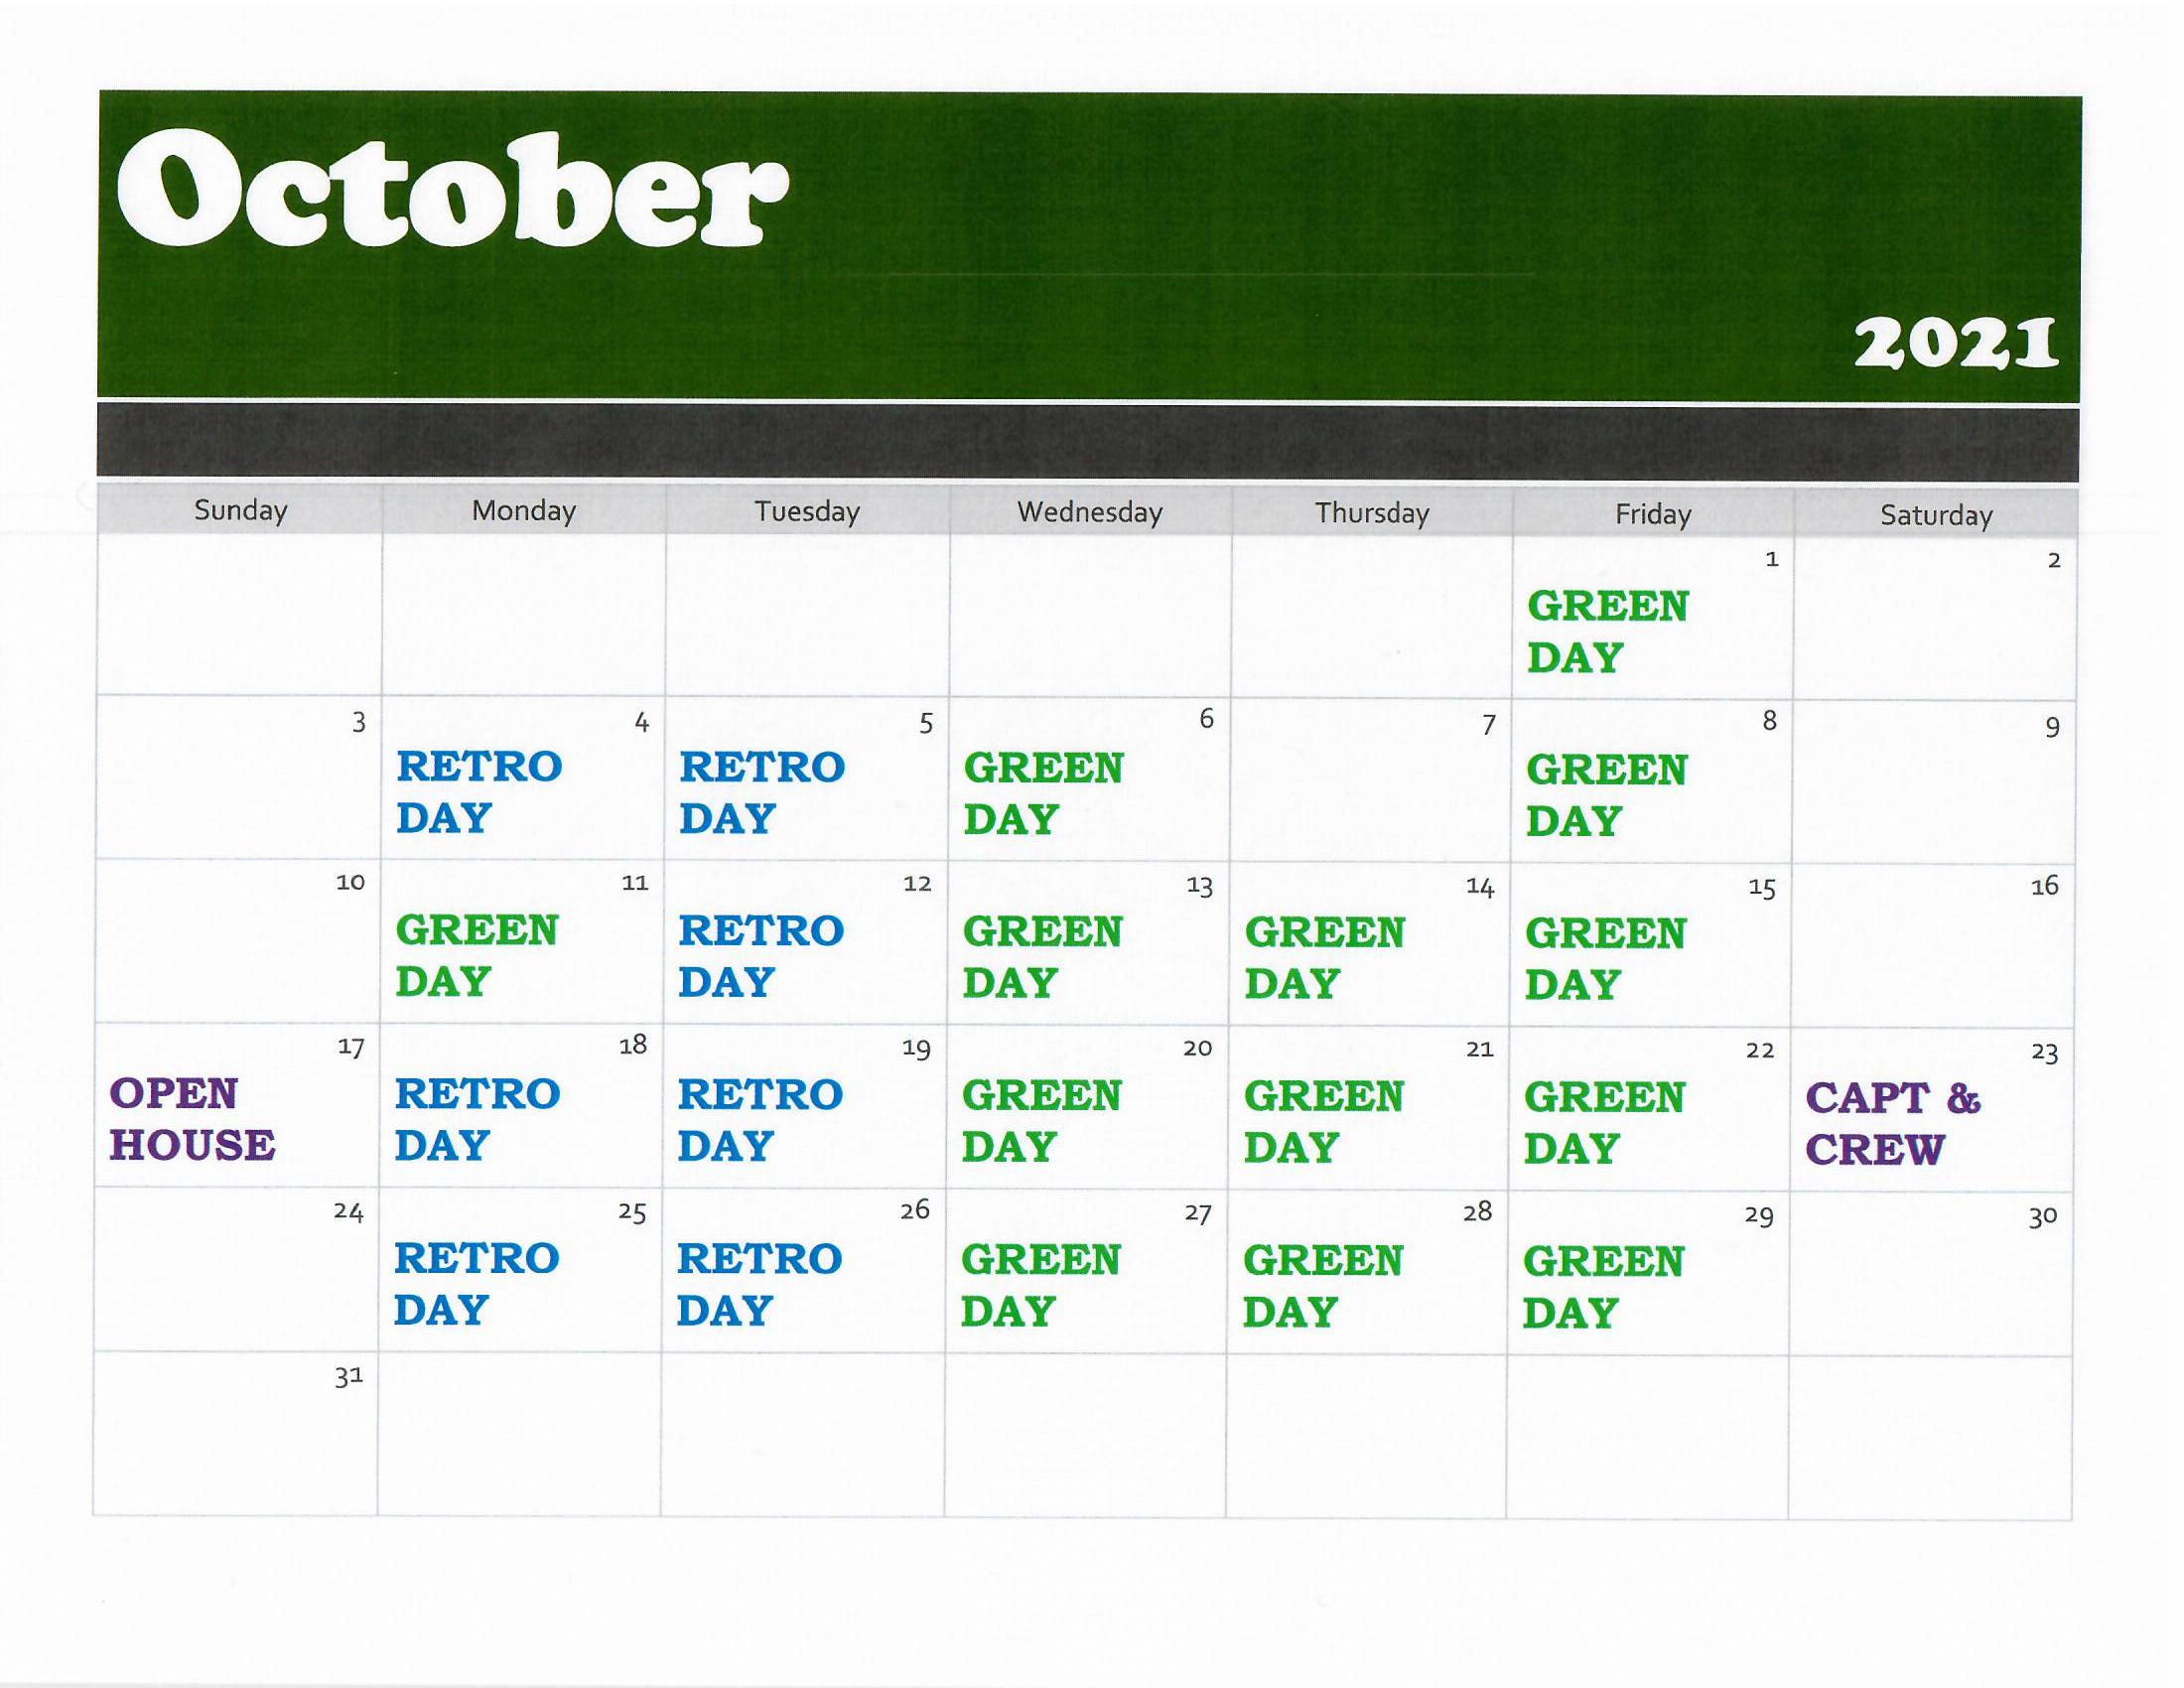 October golf calendar